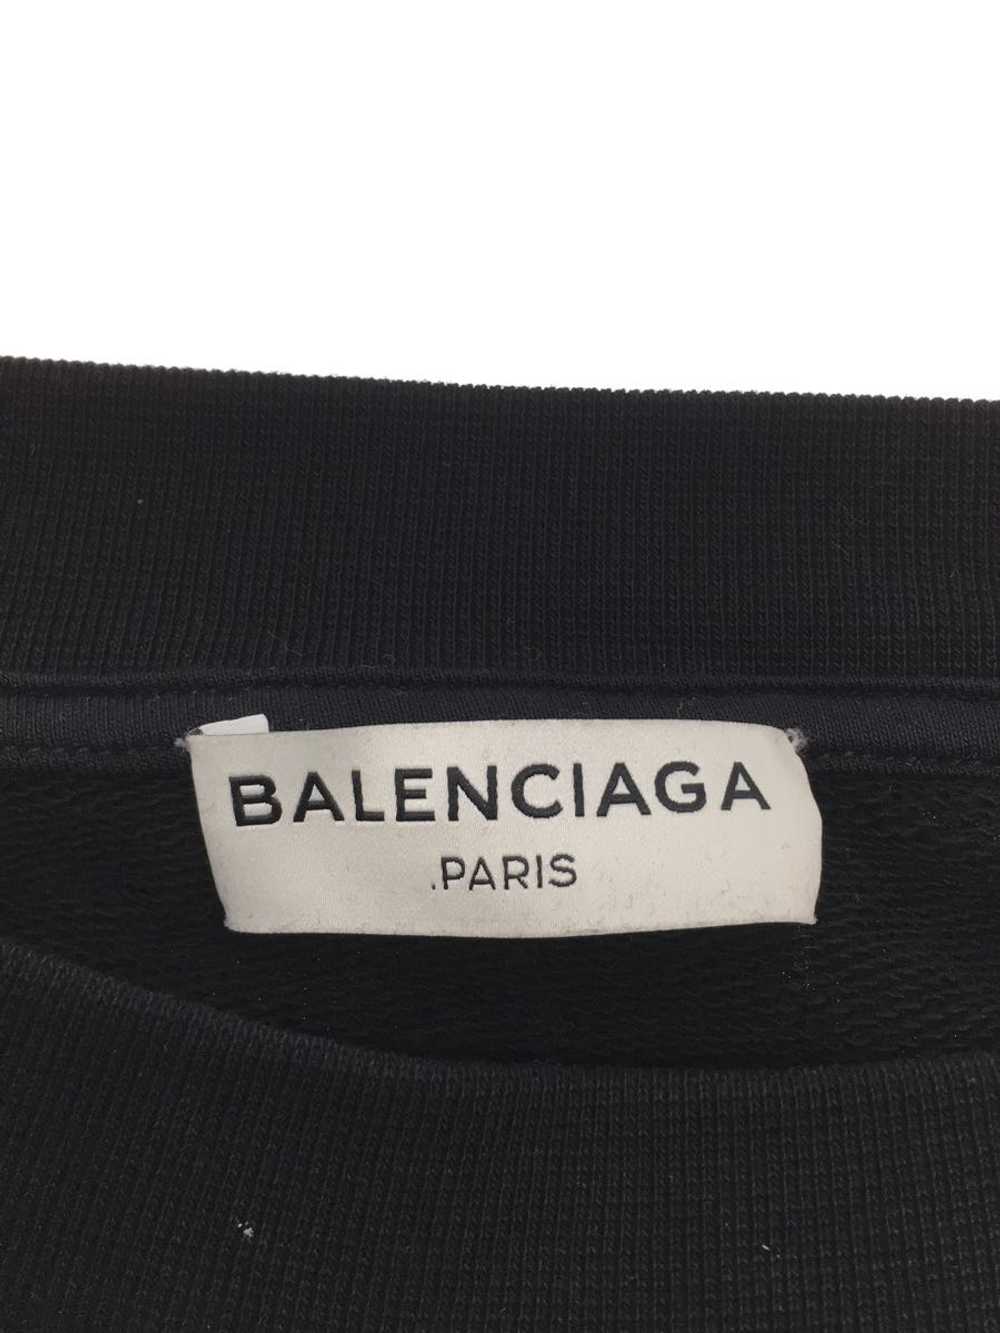 Balenciaga Rubber Logo Crew Neck Sweatshirt Size … - image 3